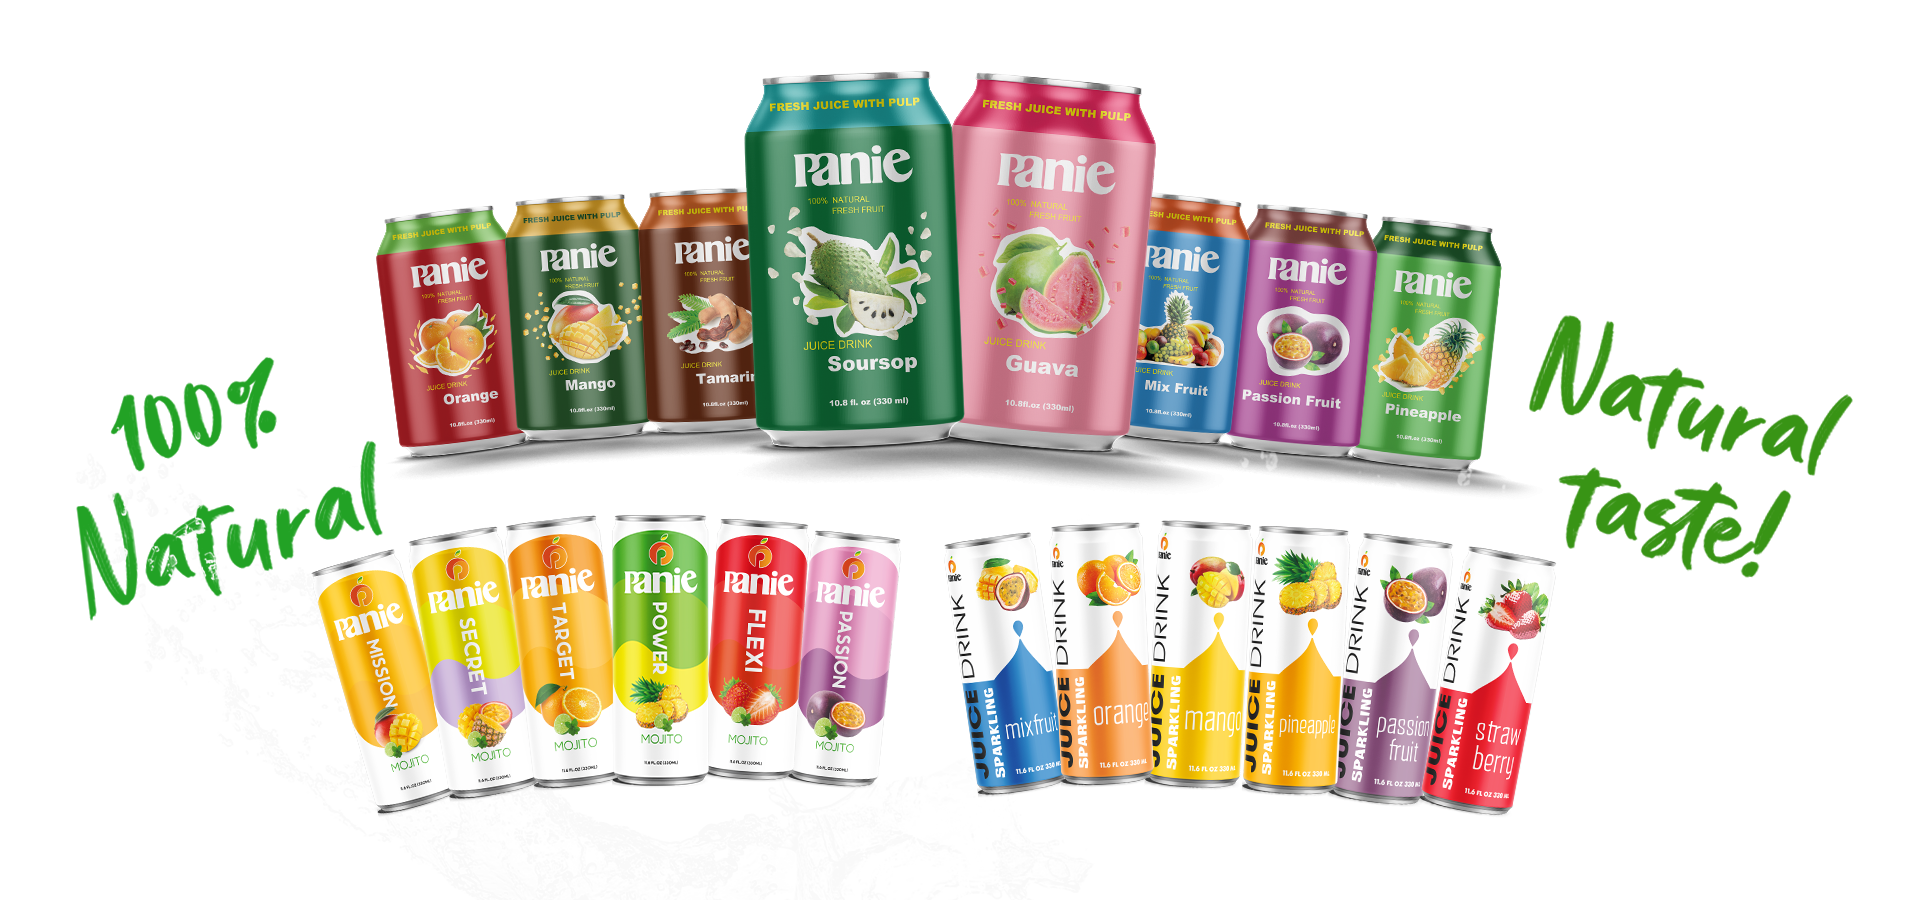 Panie-Juice-Manufacturing-Beverages-Manufacturing-backgroud